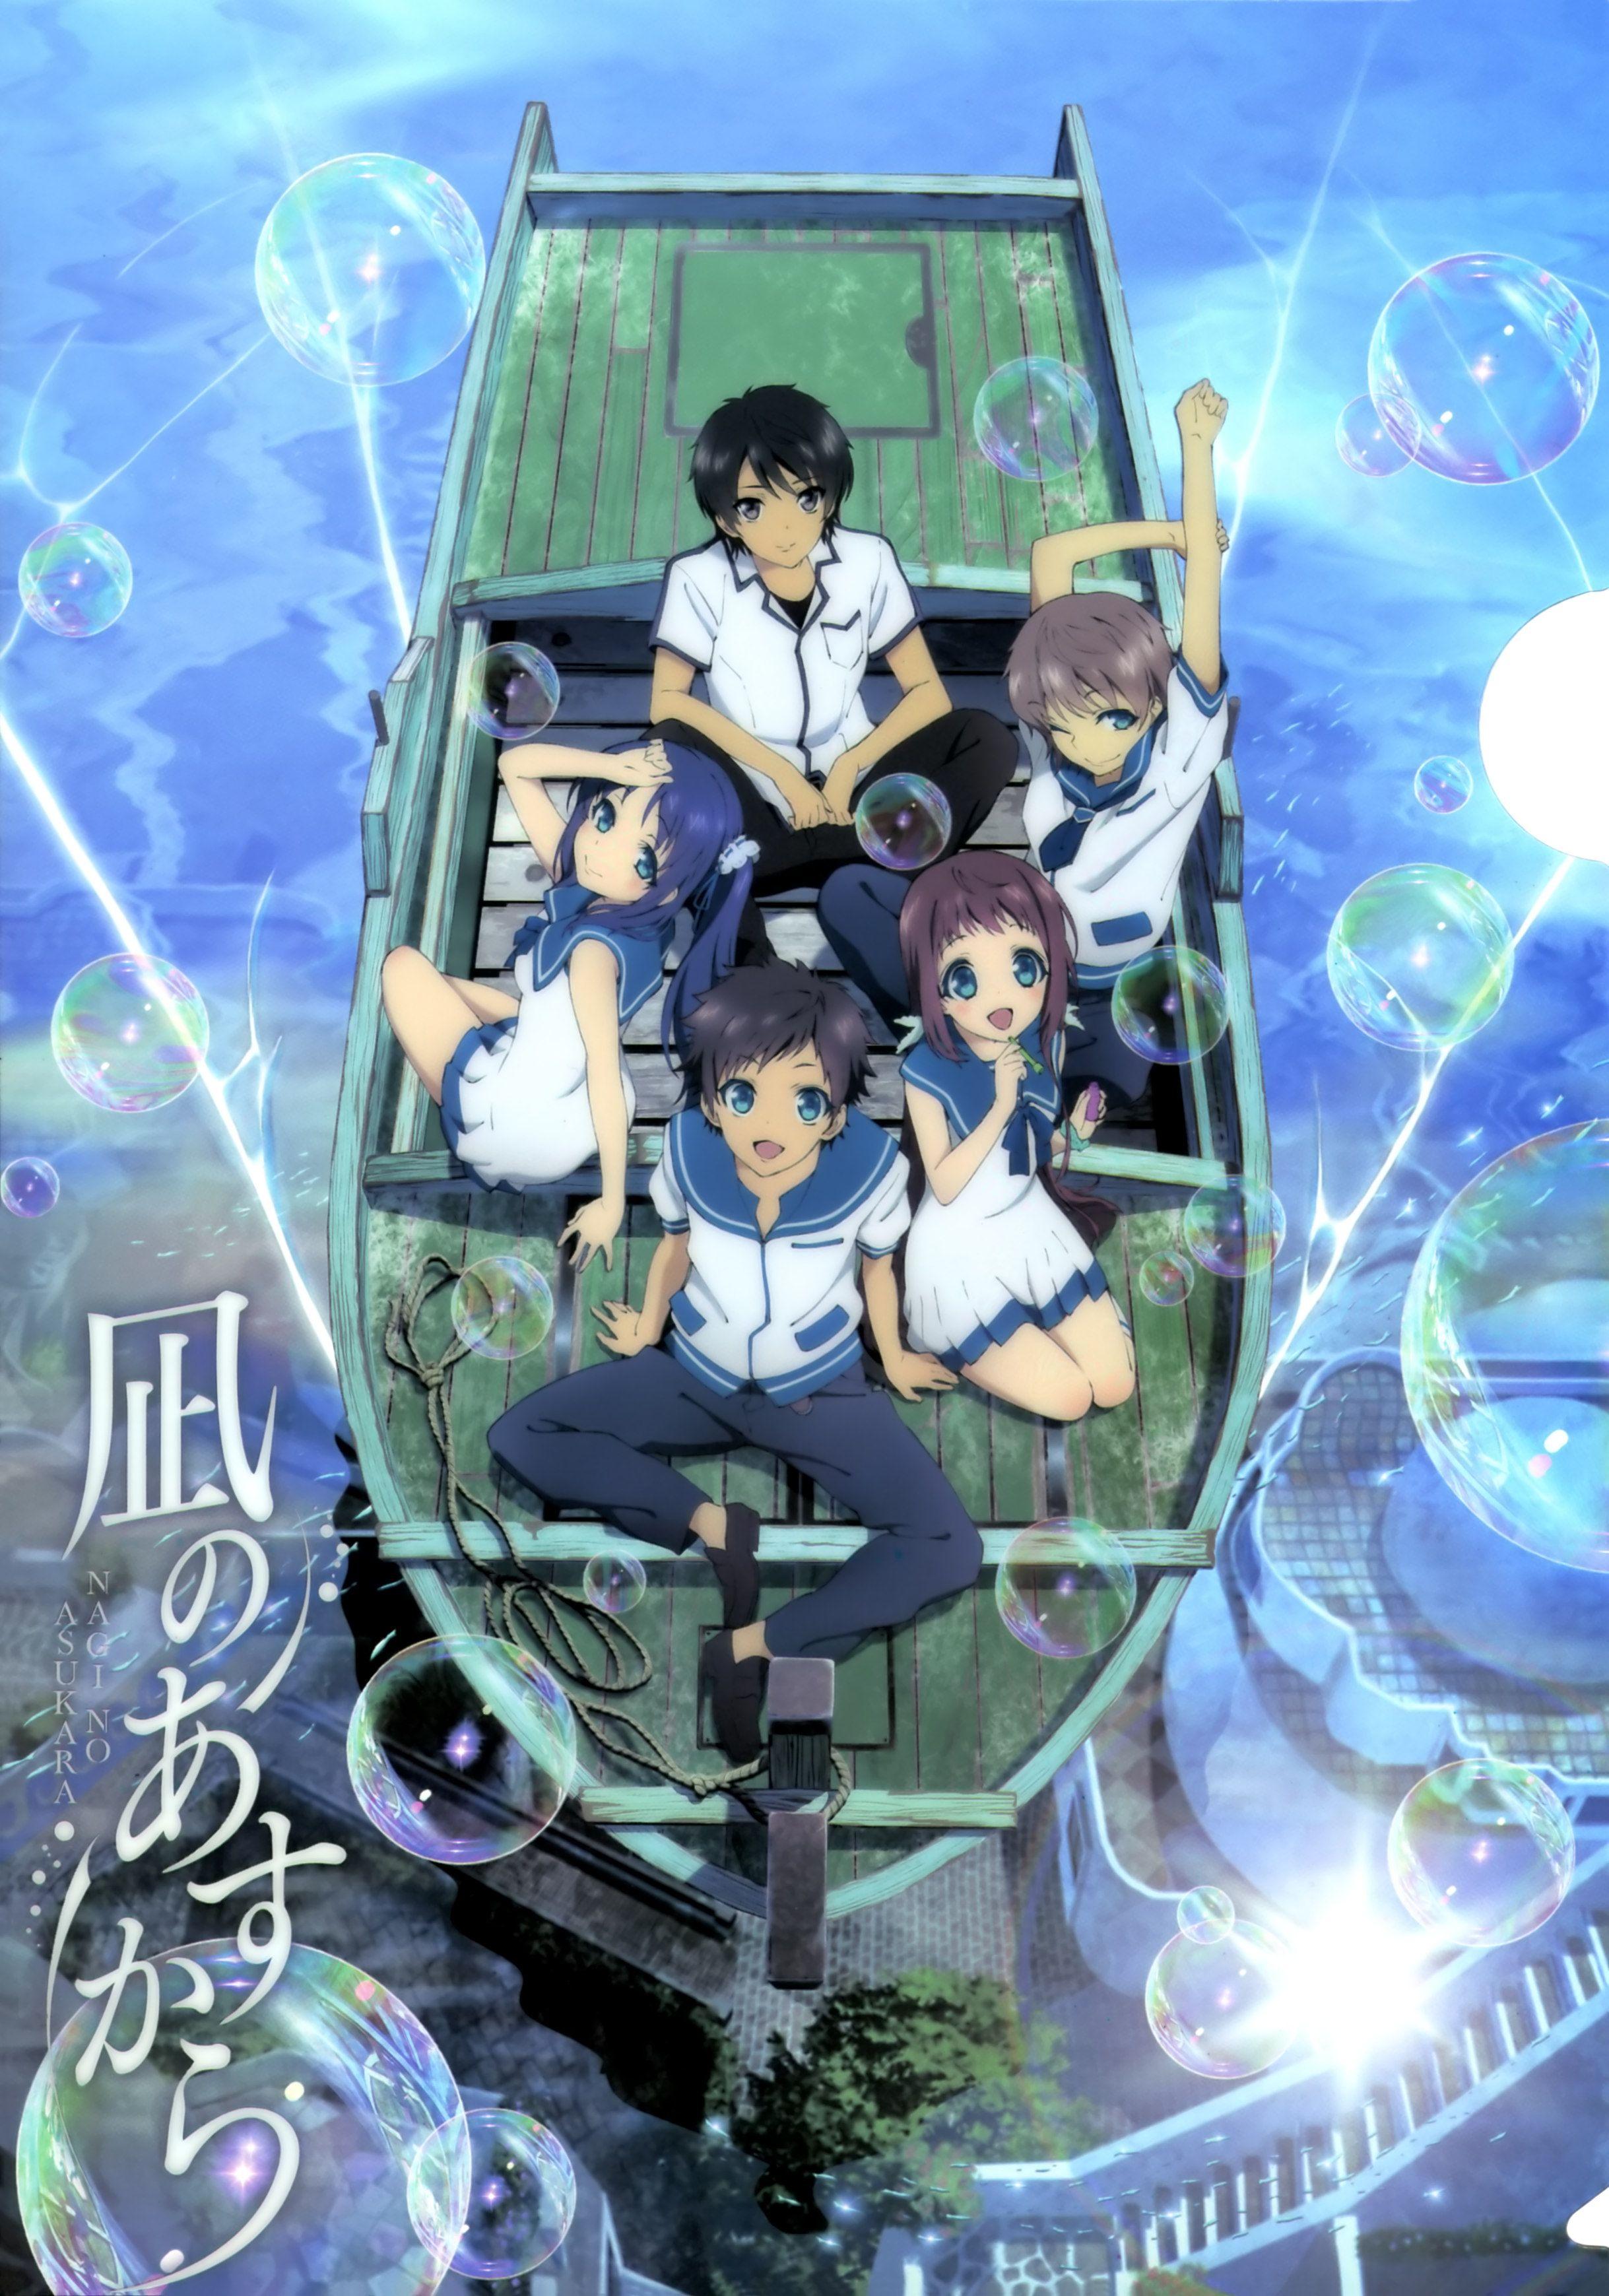 Anime Nagi no Asukara HD Wallpaper by Aditalfian